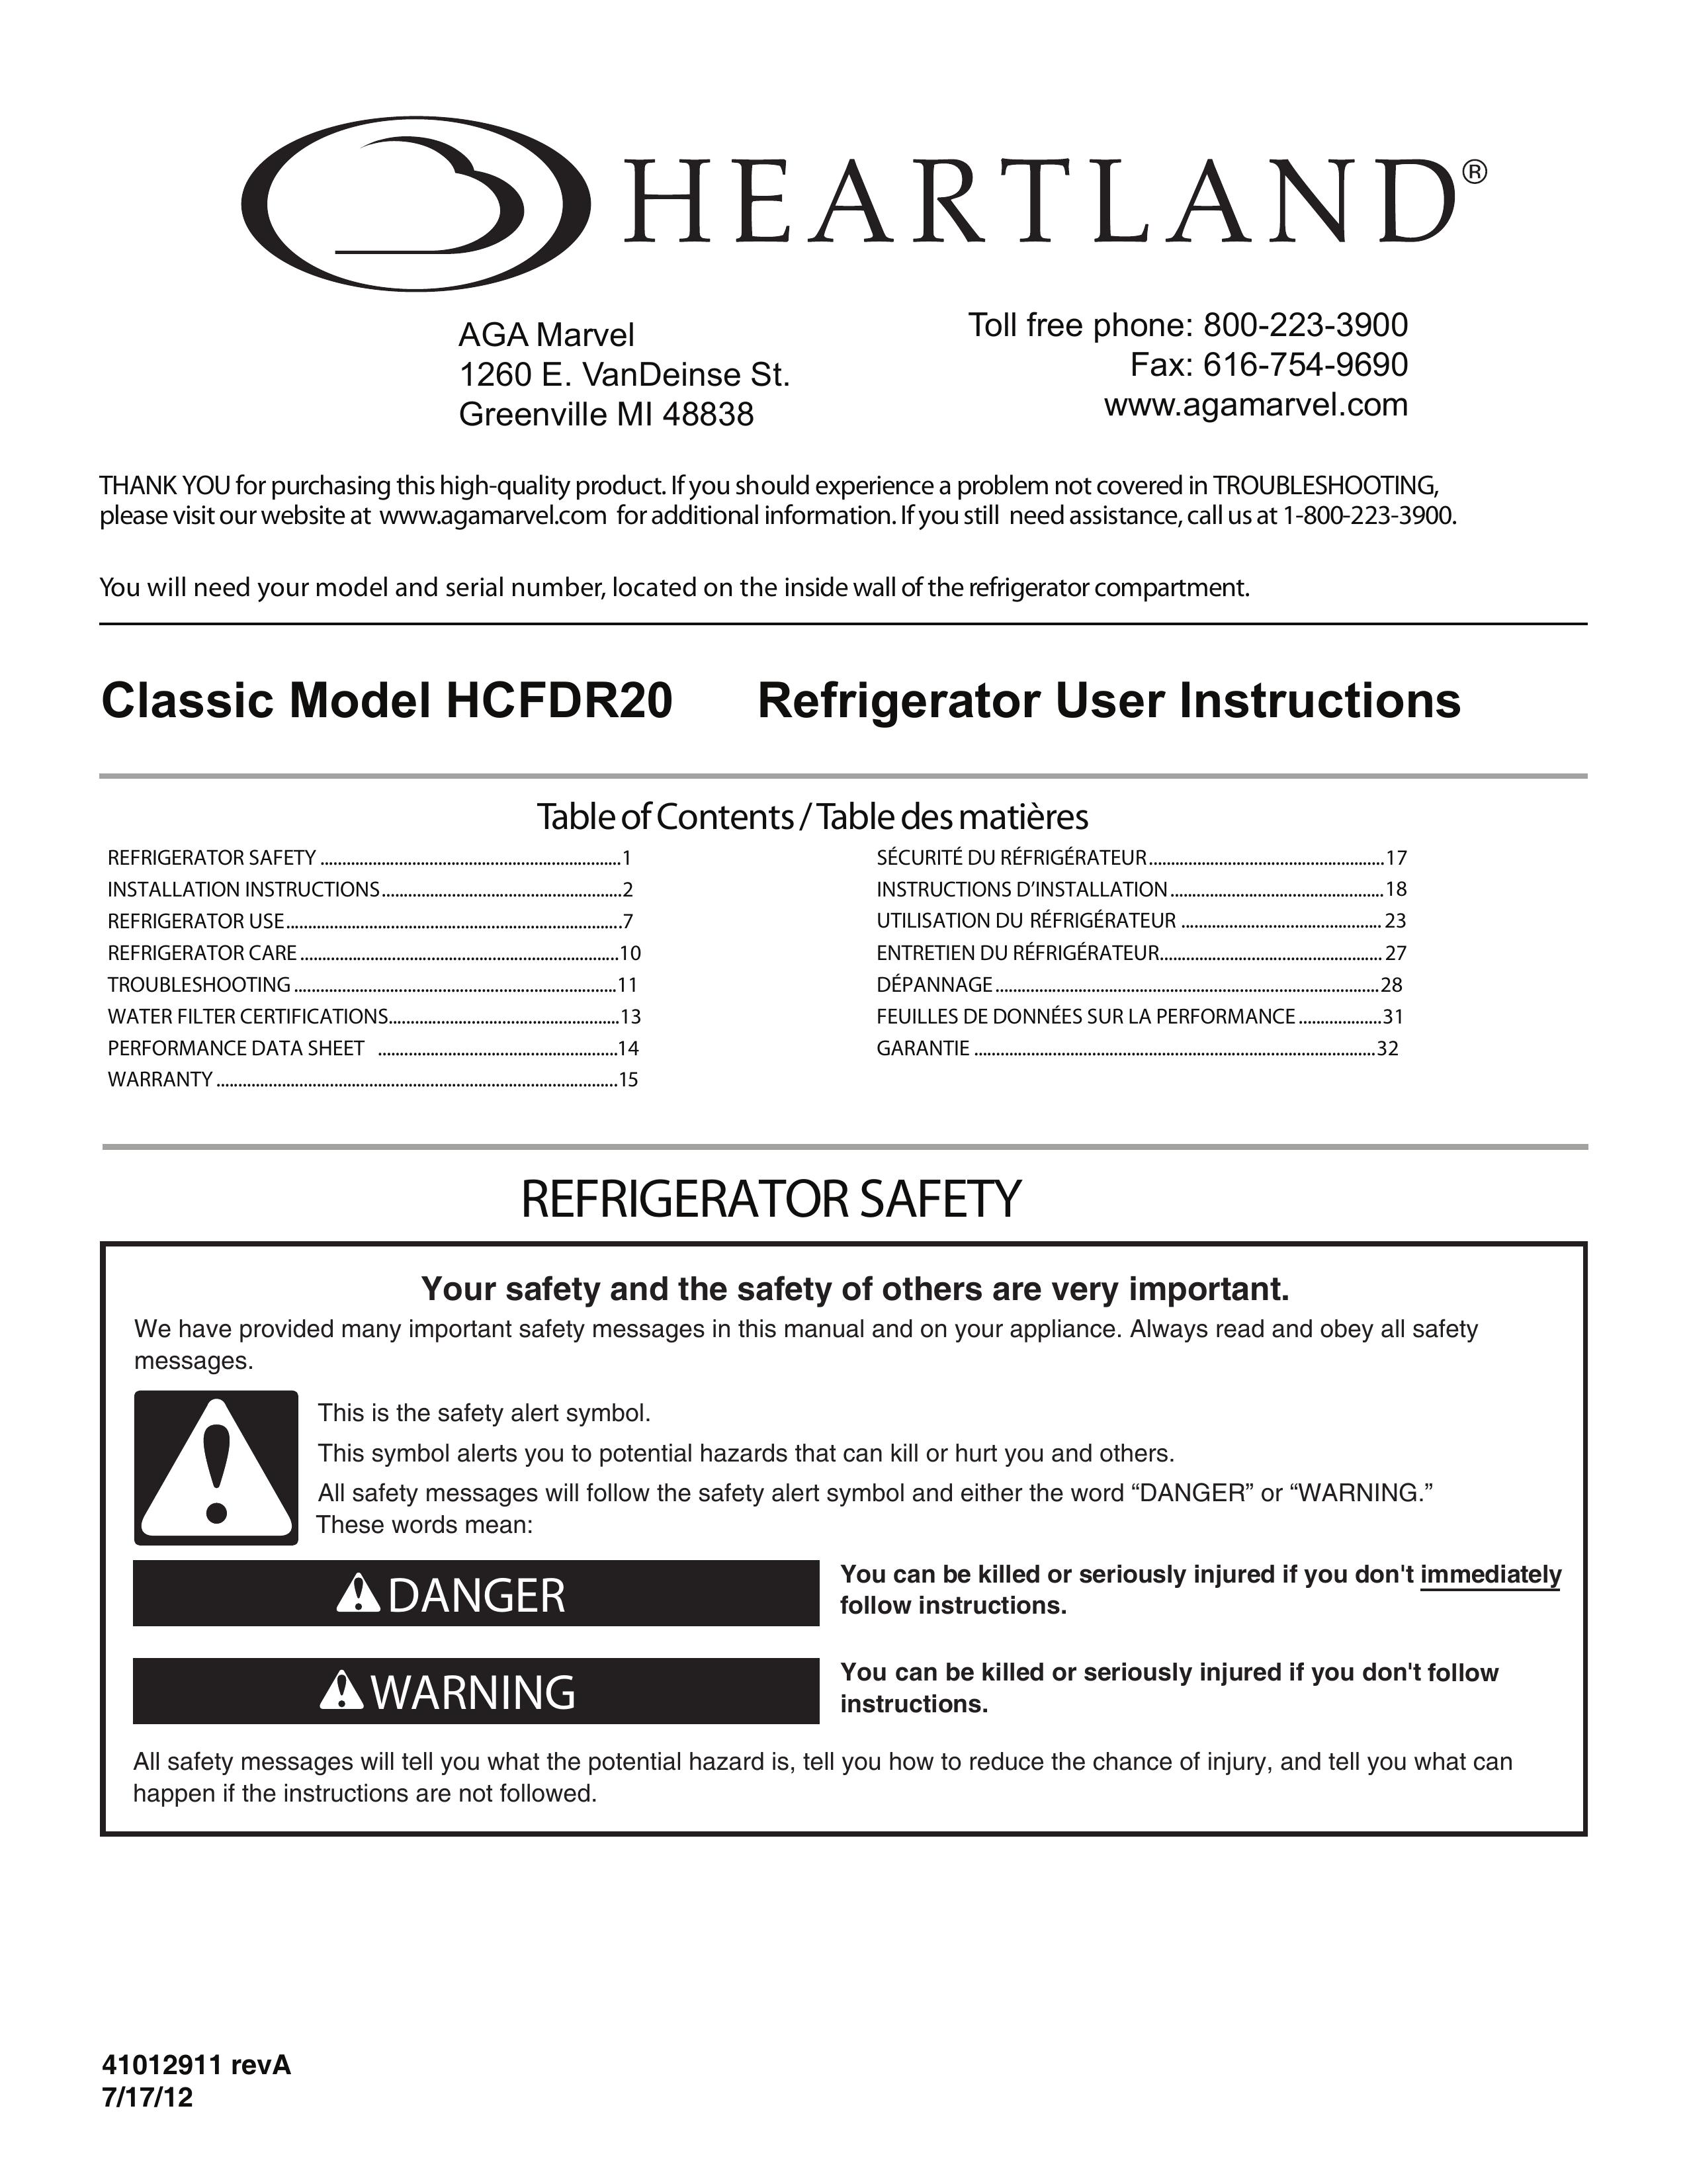 Heartland HCFDR20 Refrigerator User Manual